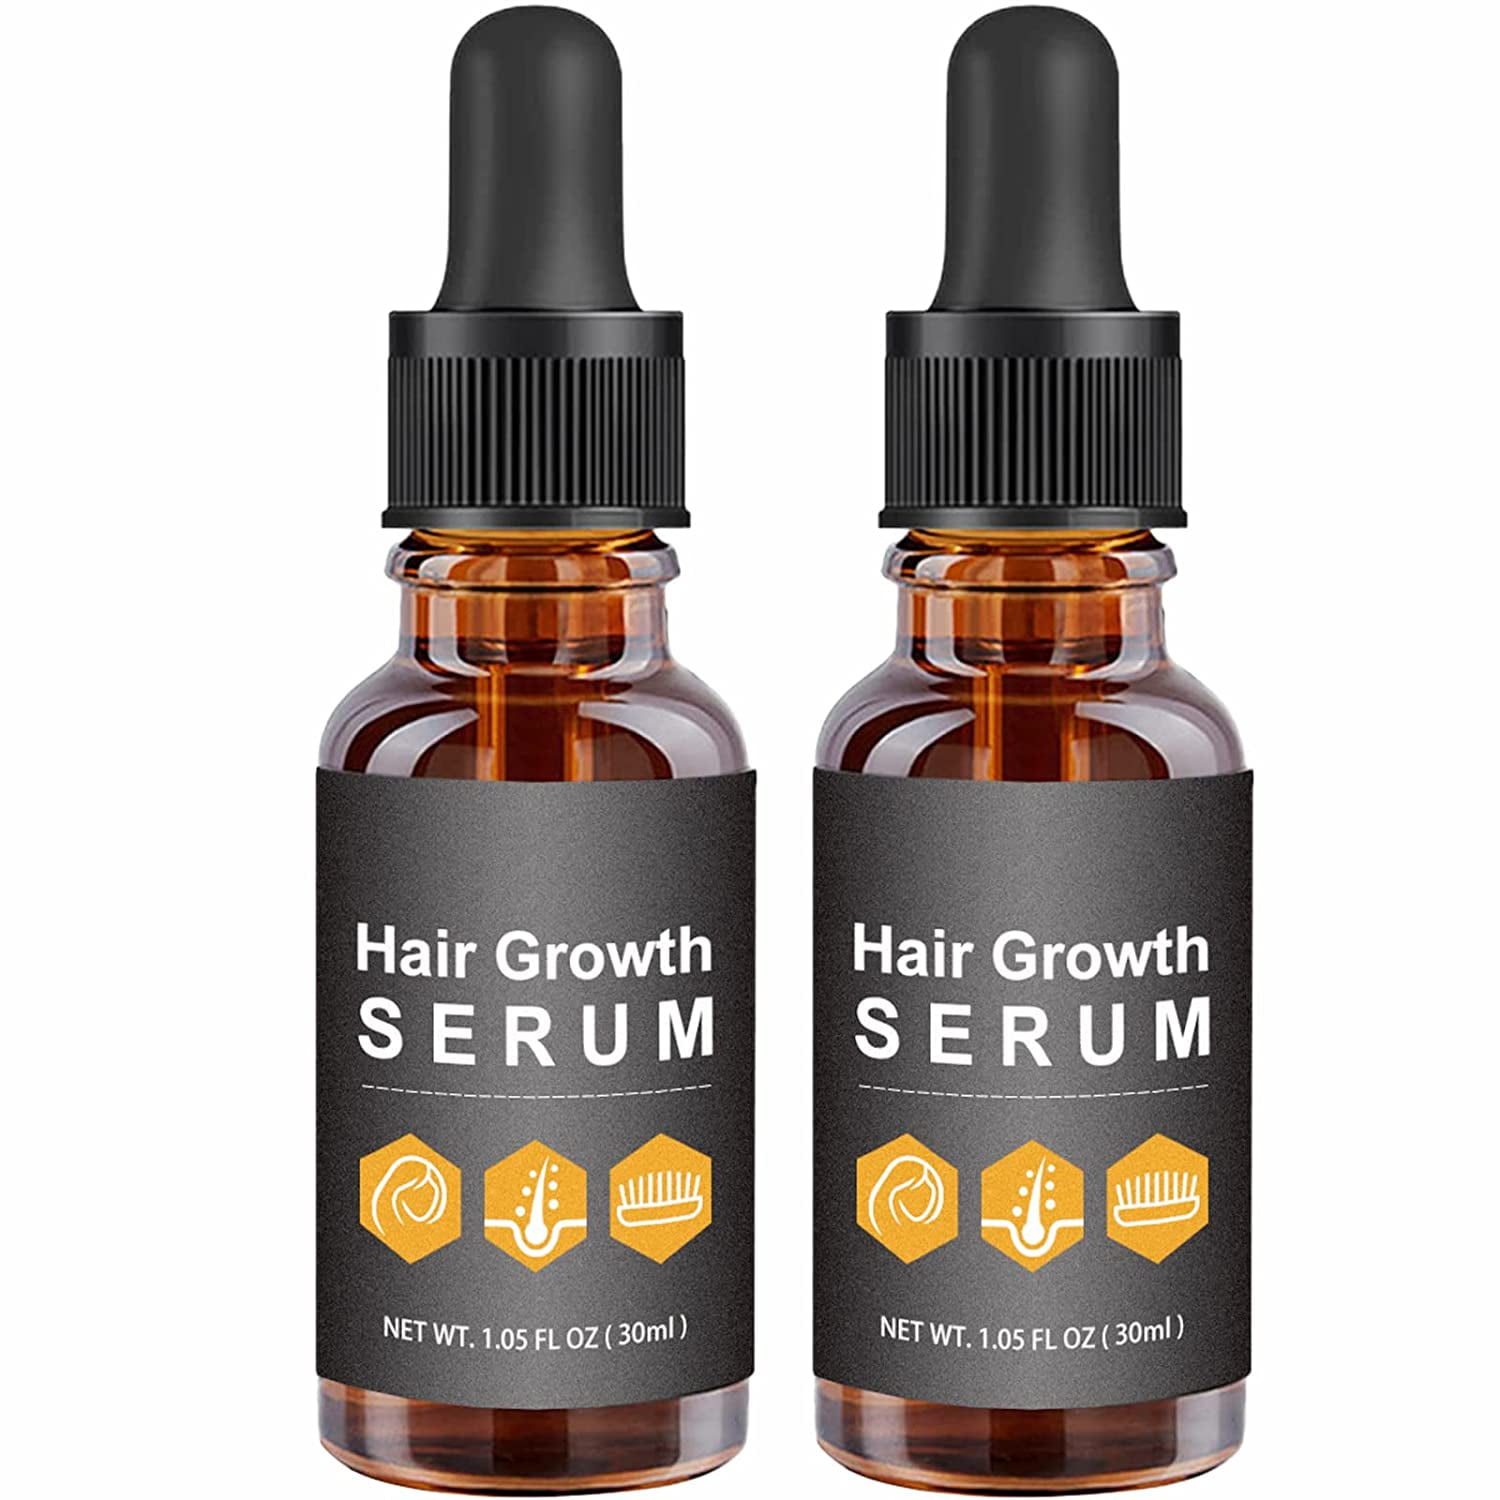 Allurium Hair Growth Serum for Black Women JAYSUING Anti Hair Loss Nourish  Dry Damaged Hair Repair